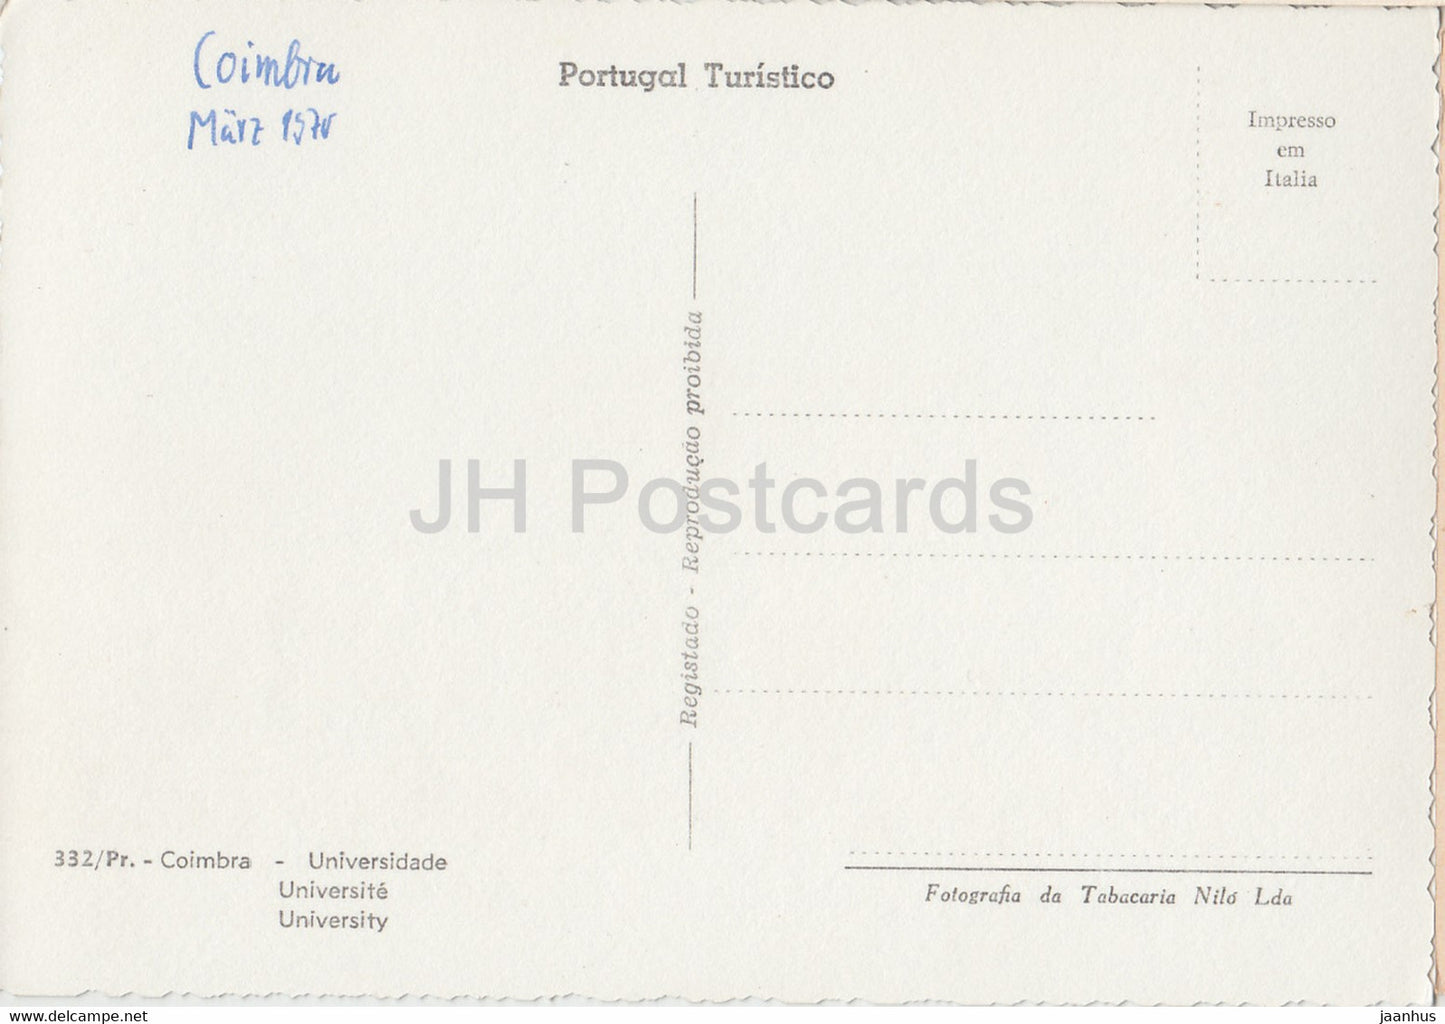 Coimbra – Universidade – Universität – 1970 – Portugal – gebraucht